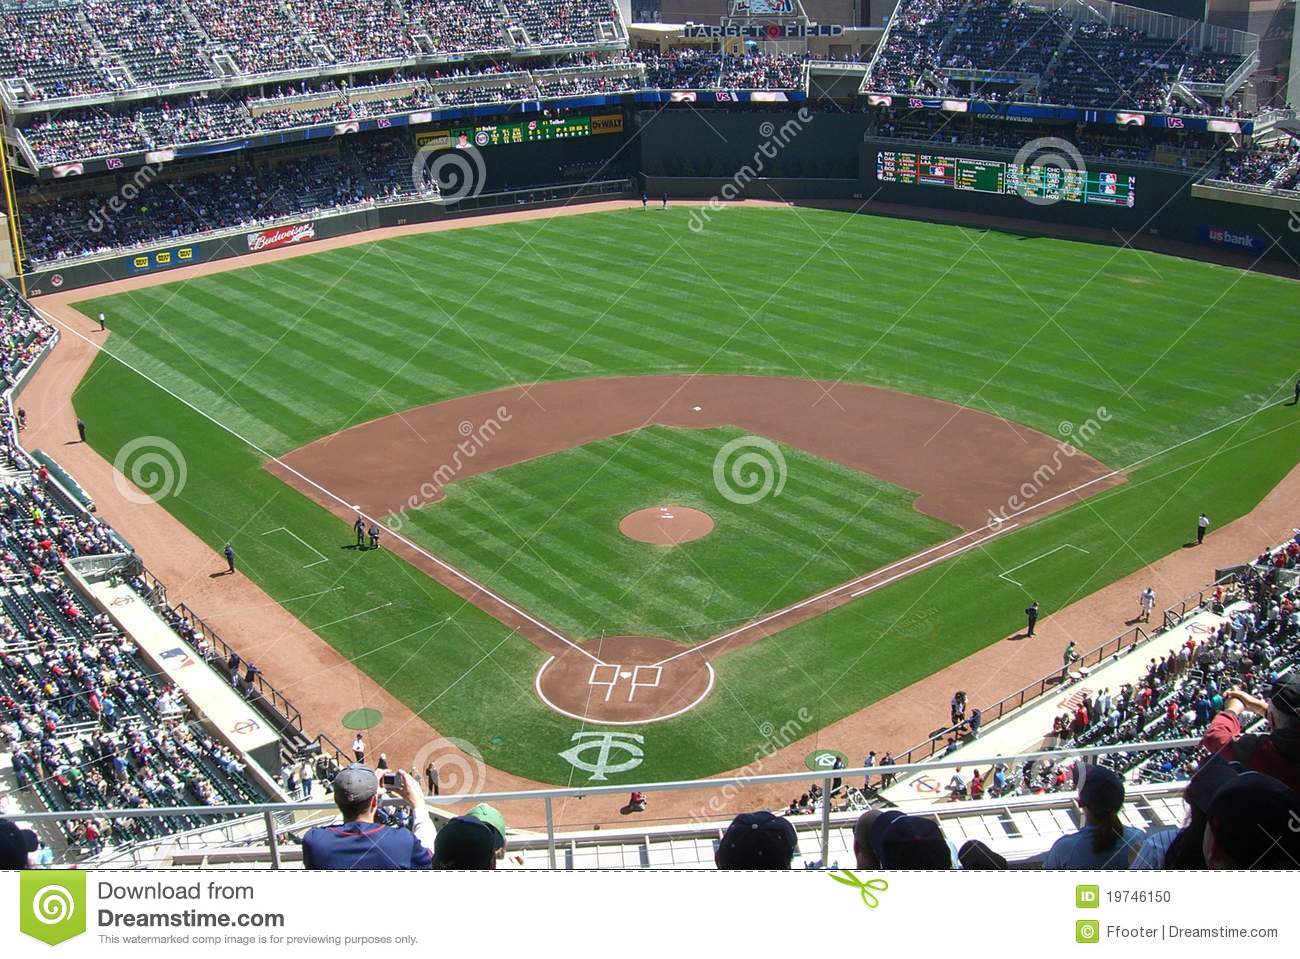 Brand New Ballpark In Minneapolis Returns Outdoor Baseball To The City